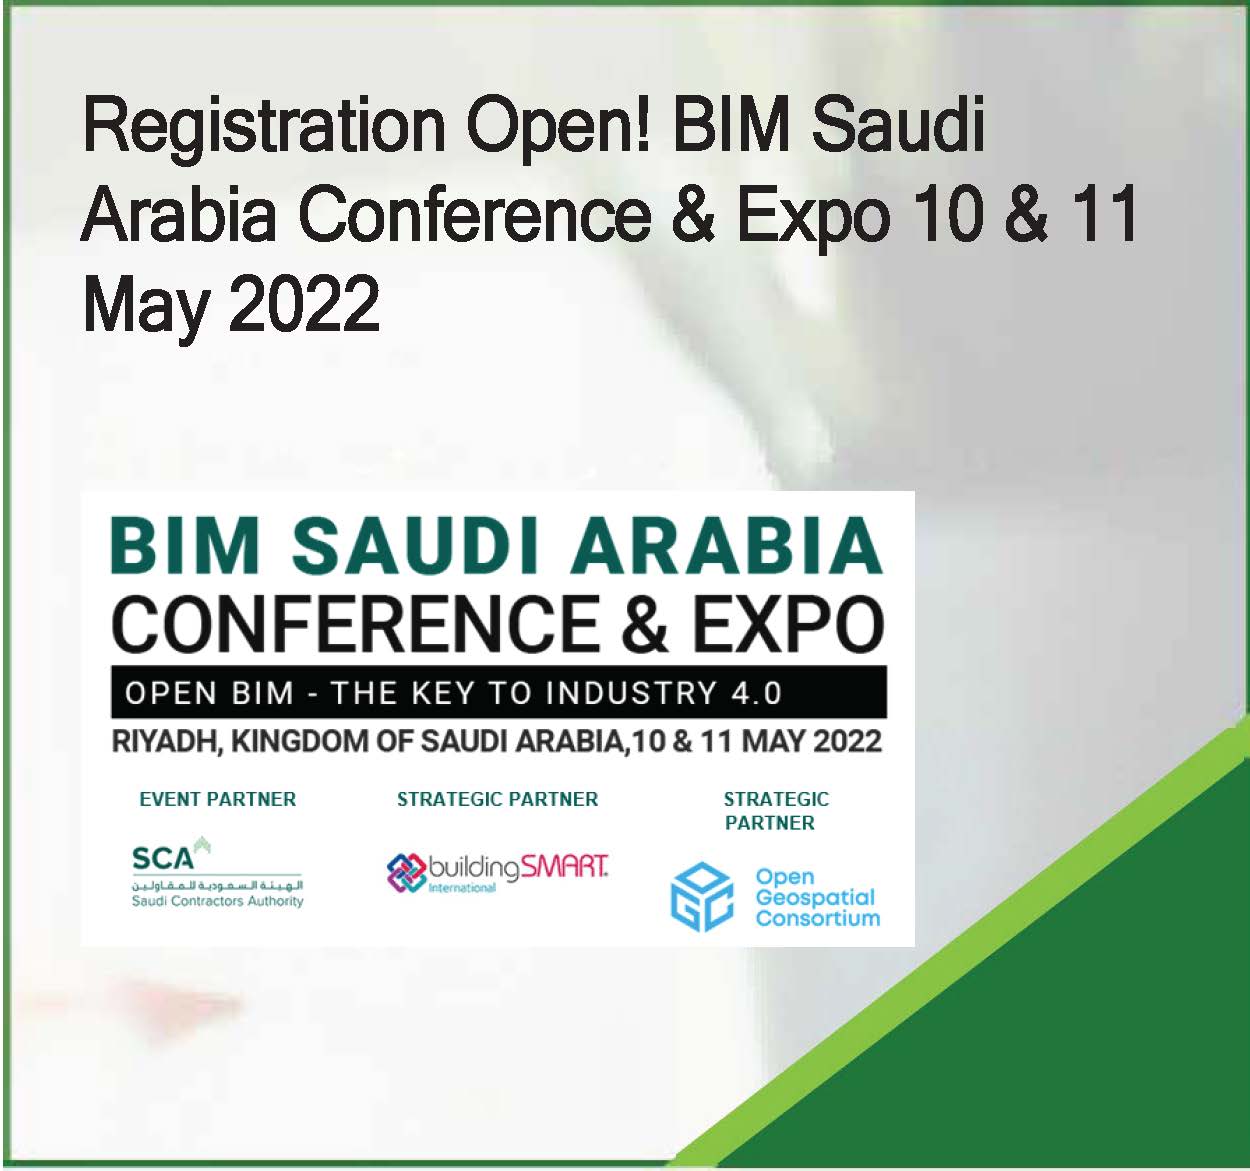 Registration Open! BIM Saudi Arabia Conference & Expo 10 & 11 May 2022